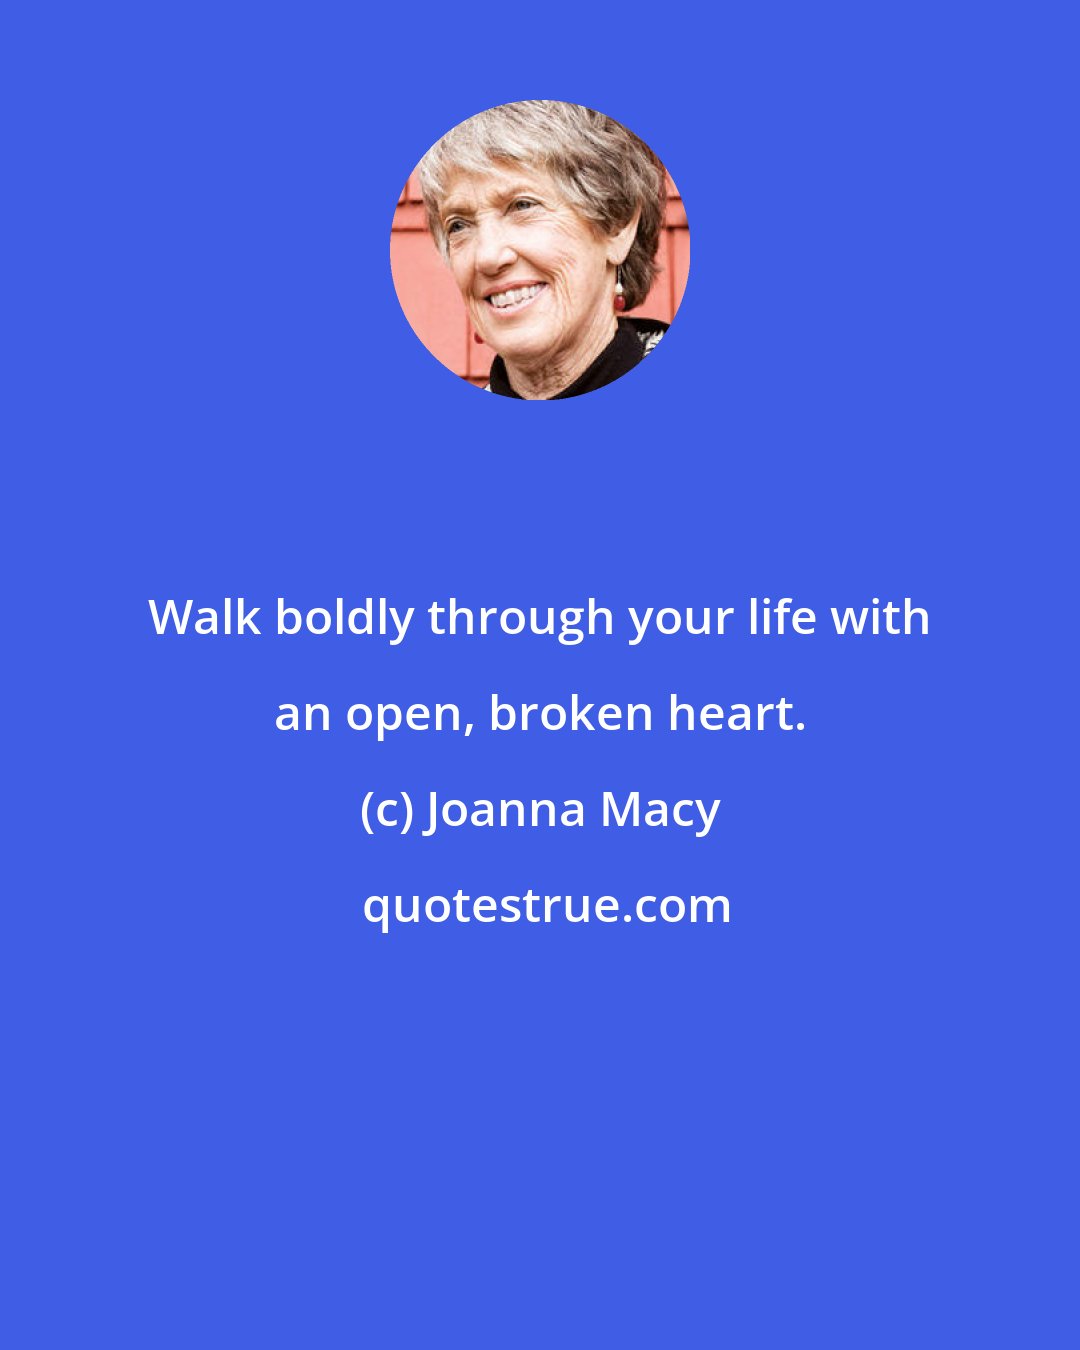 Joanna Macy: Walk boldly through your life with an open, broken heart.